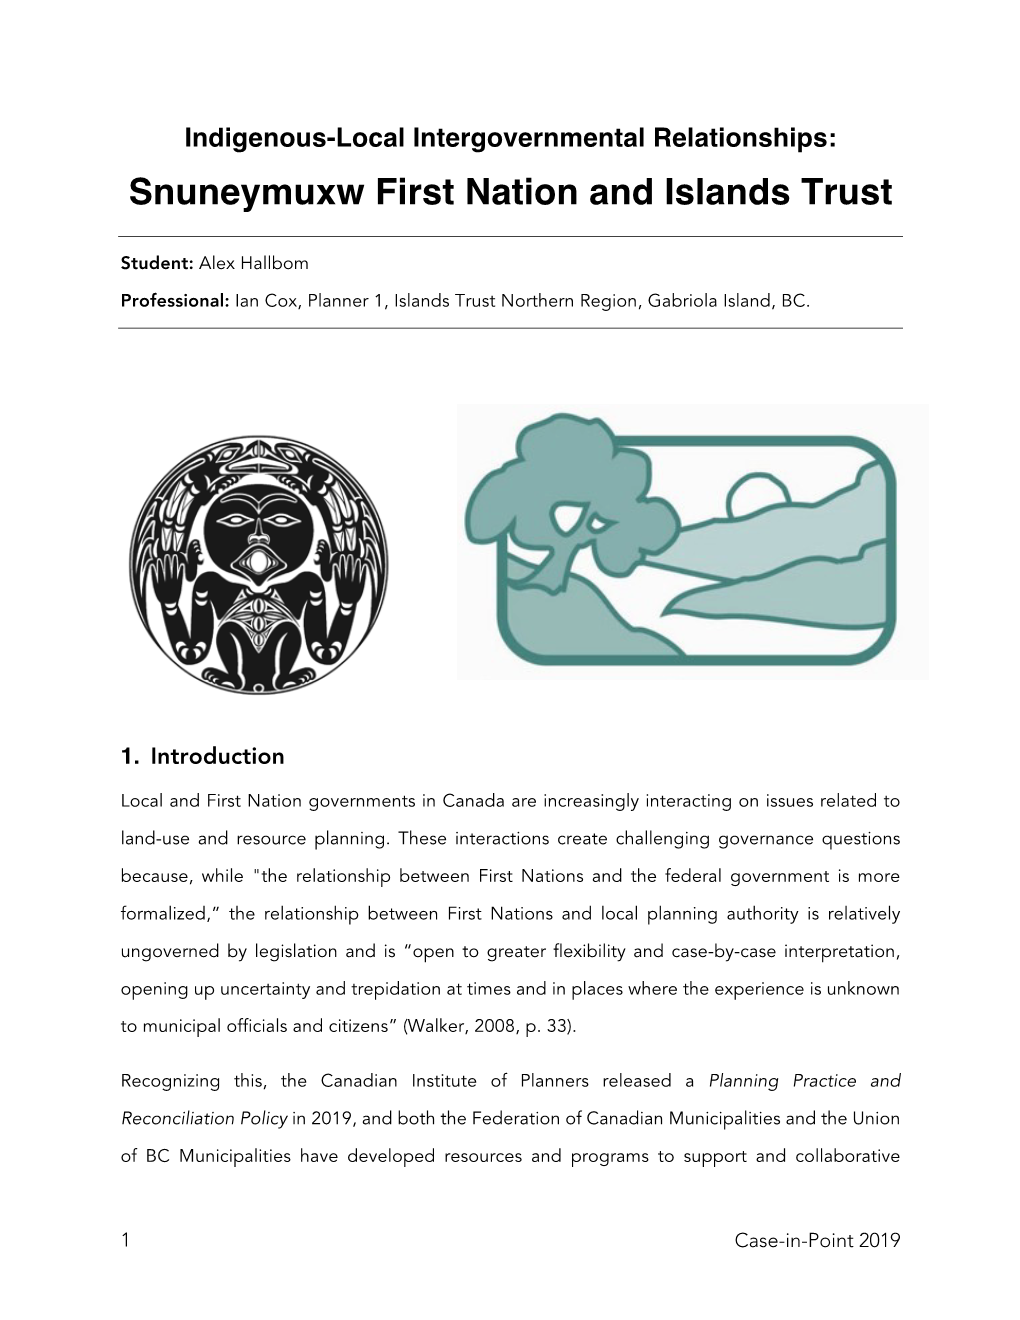 Snuneymuxw First Nation and Islands Trust